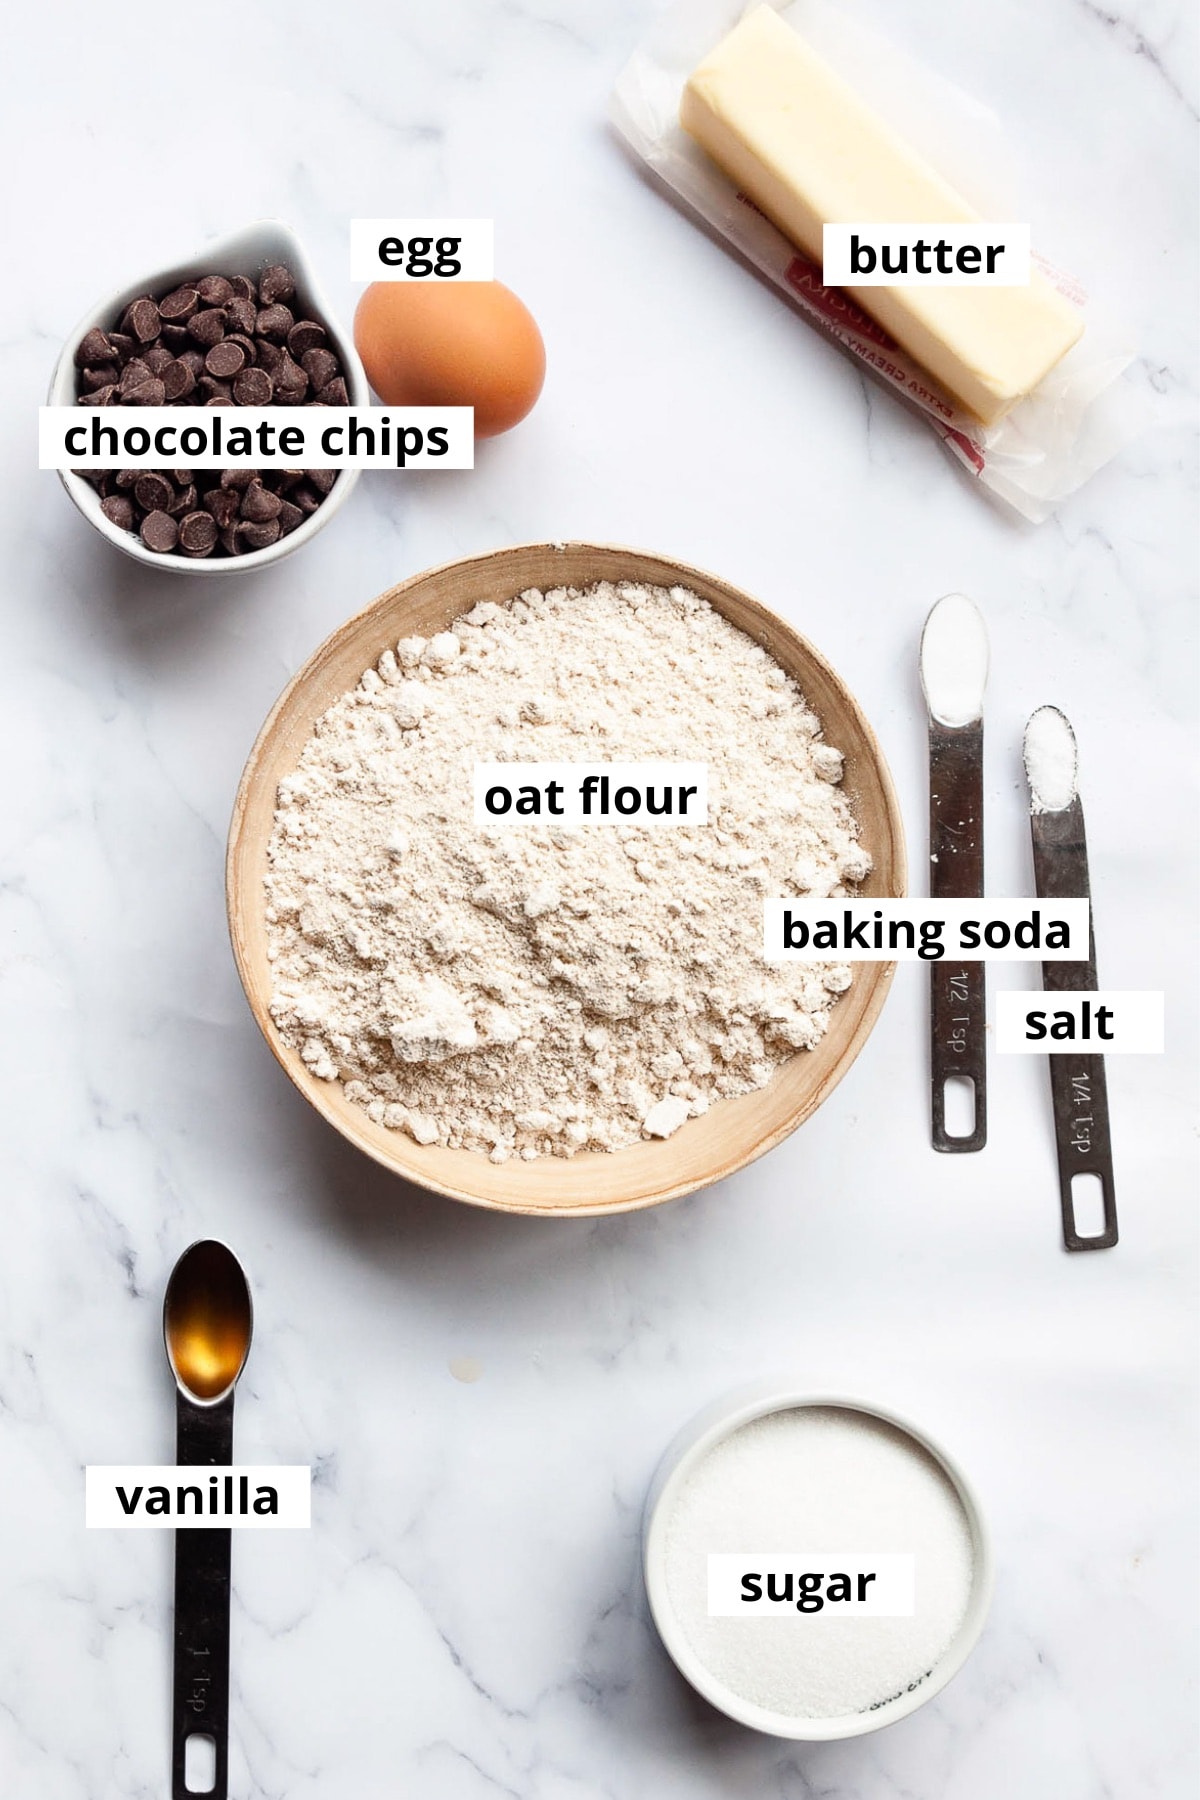 Butter, egg, chocolate chips, oat flour, baking soda, salt, vanilla extract, sugar.